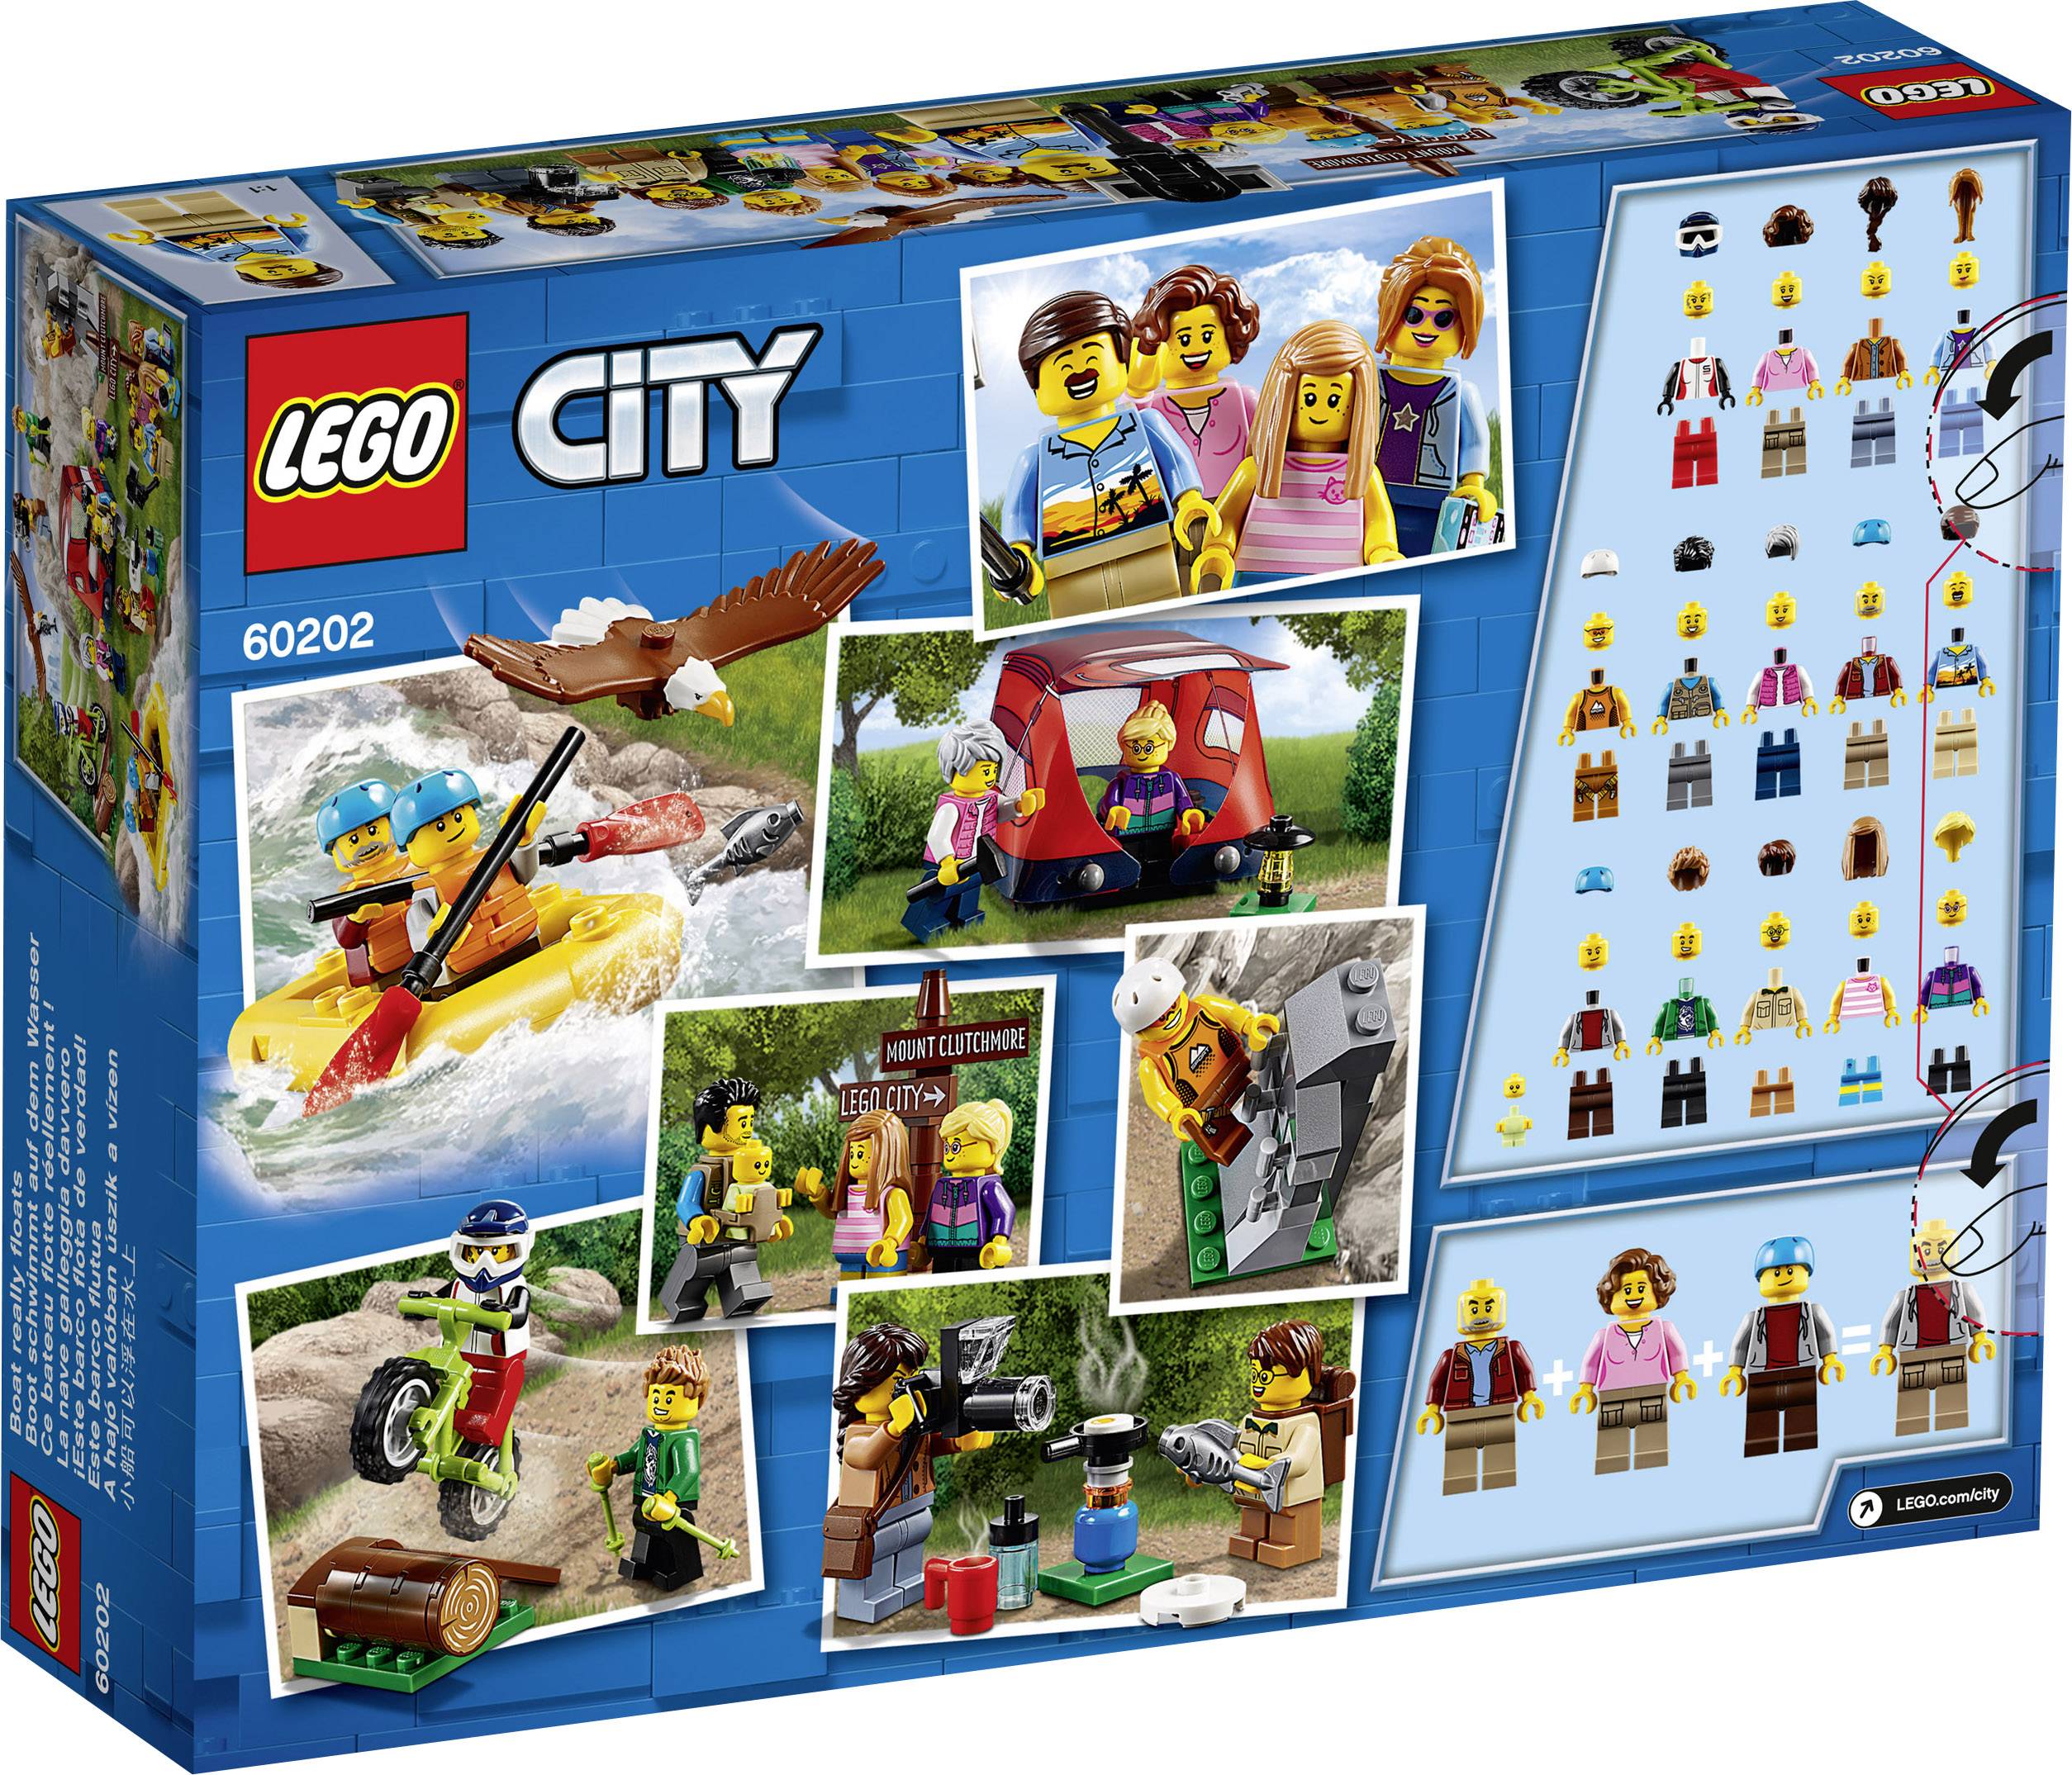 NEU 1x LEGO City Minifigur Weißkopfseeadler aus Set 60202 